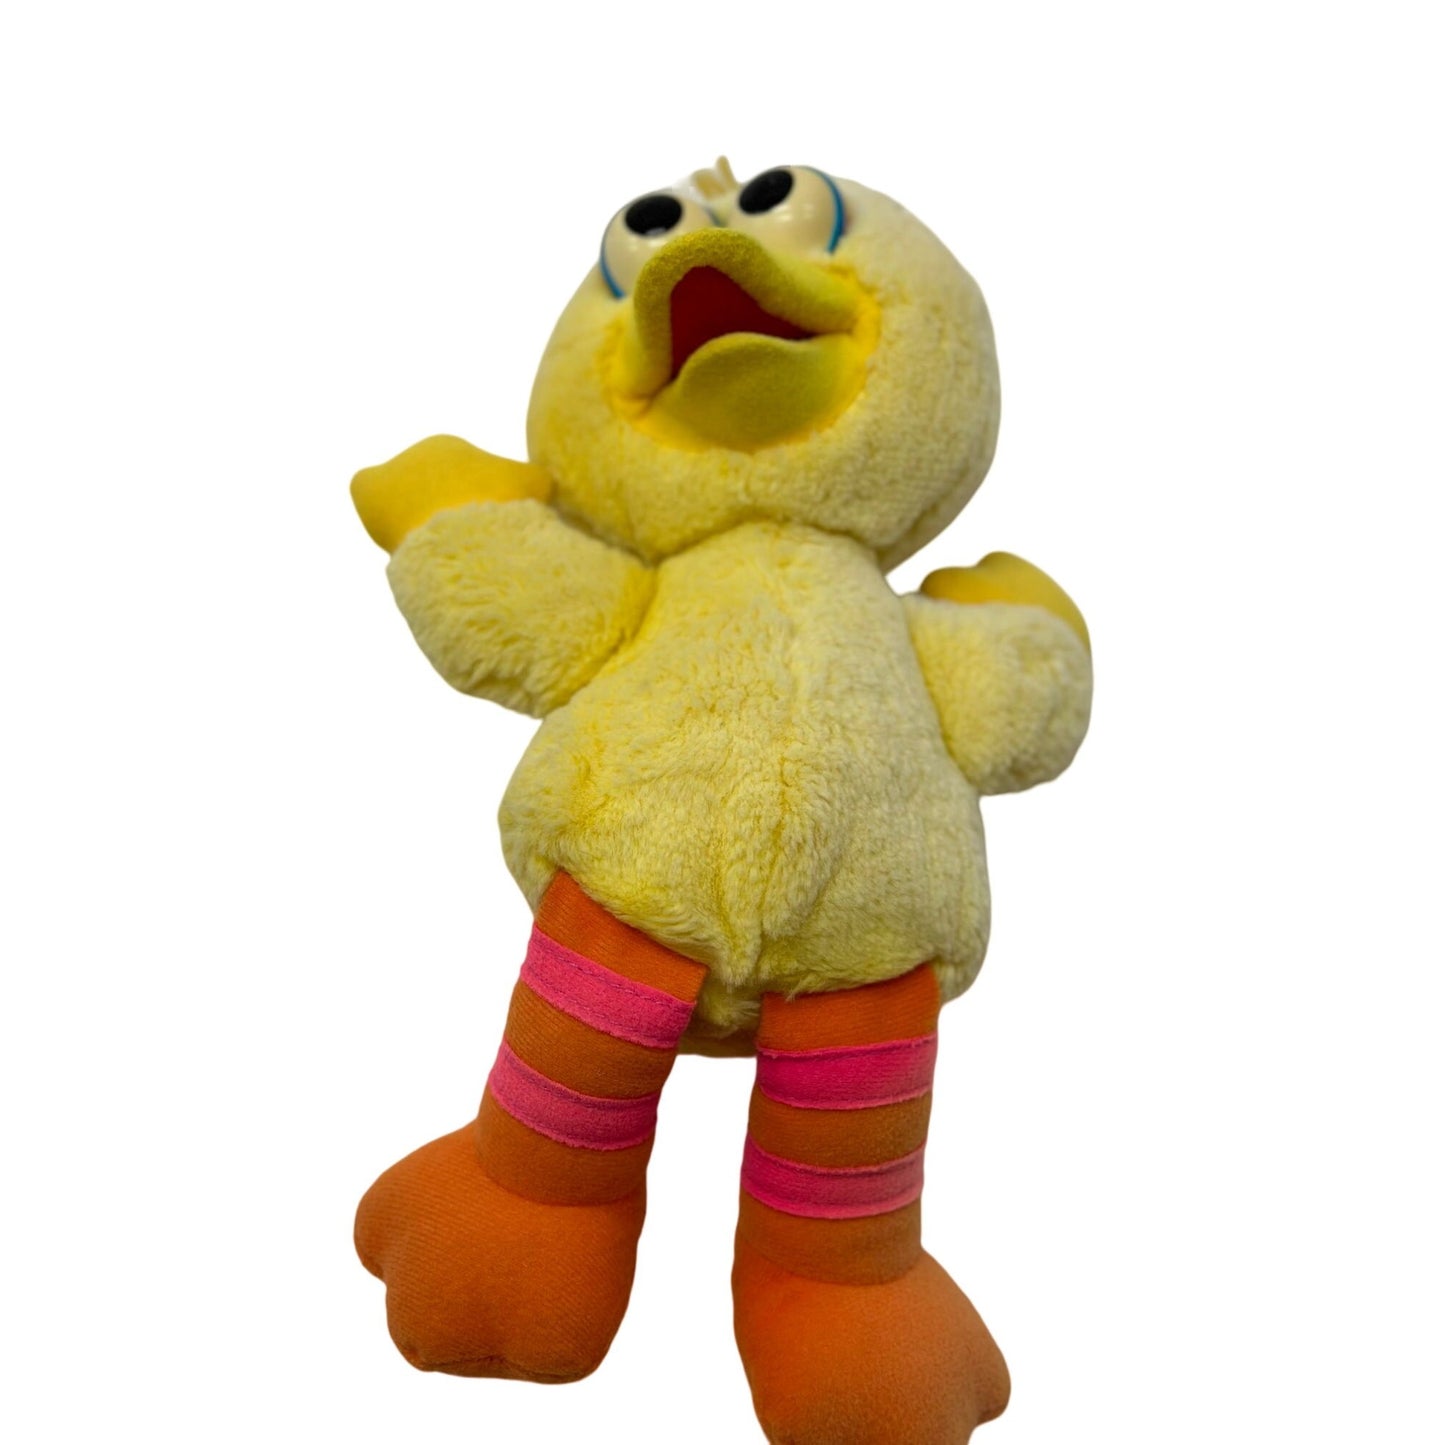 Vintage Tyco 1996 Big Bird Jim Henson Preschool Plush Stuffed Animal Toy 11”